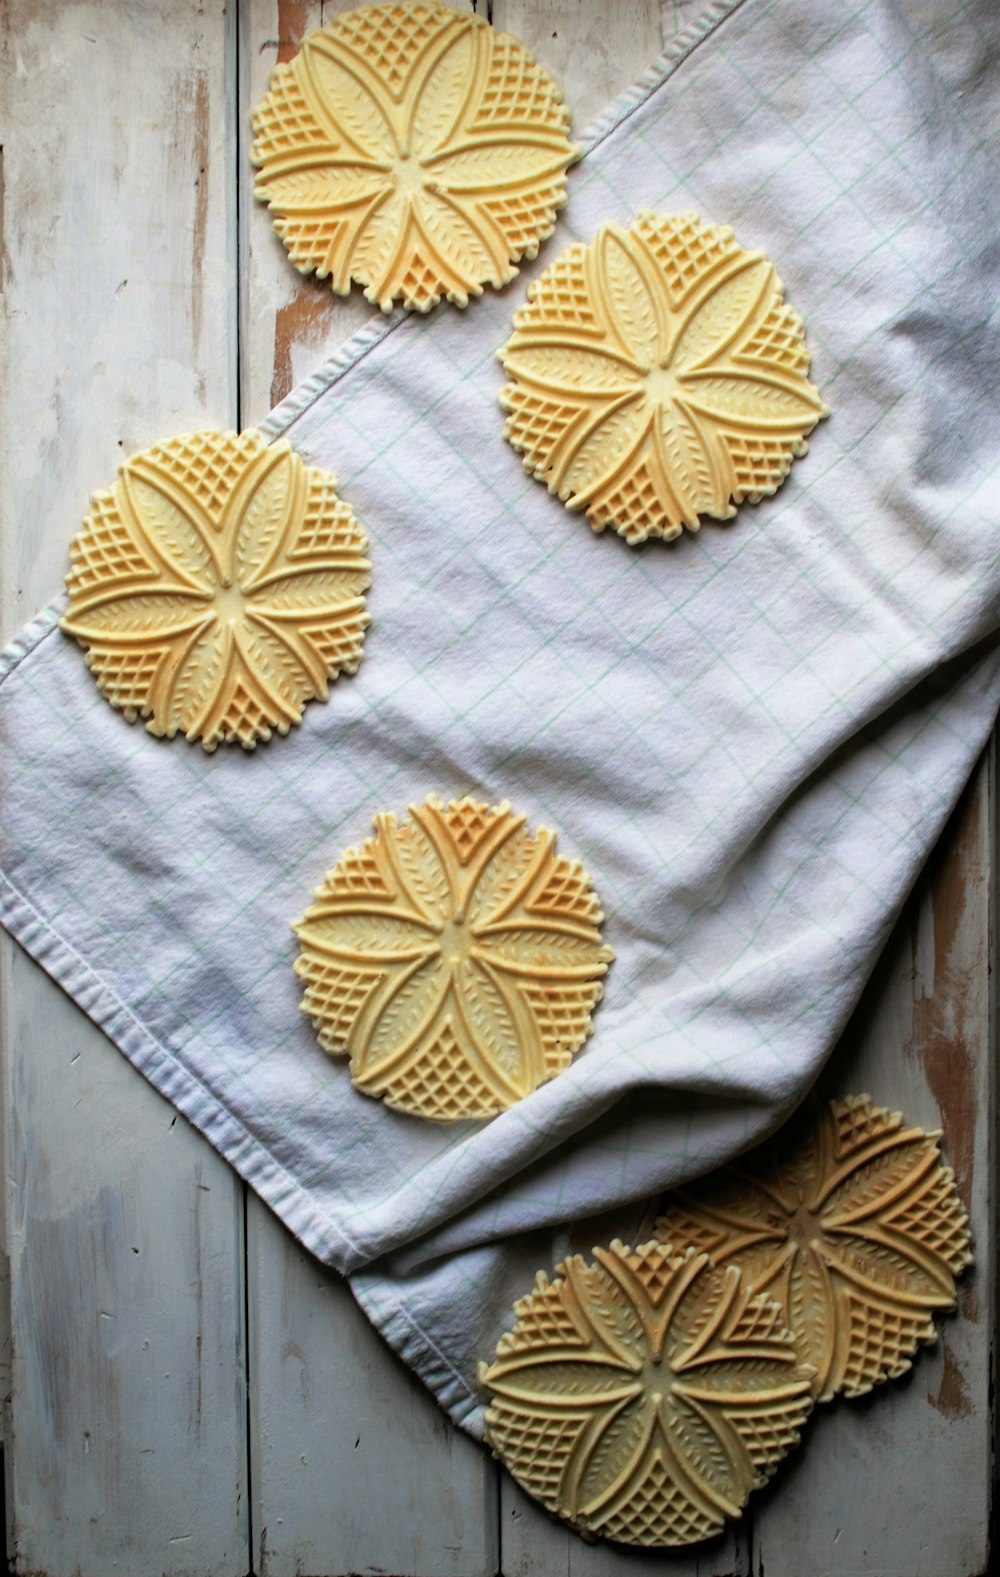 round brown pastries on top of white textile